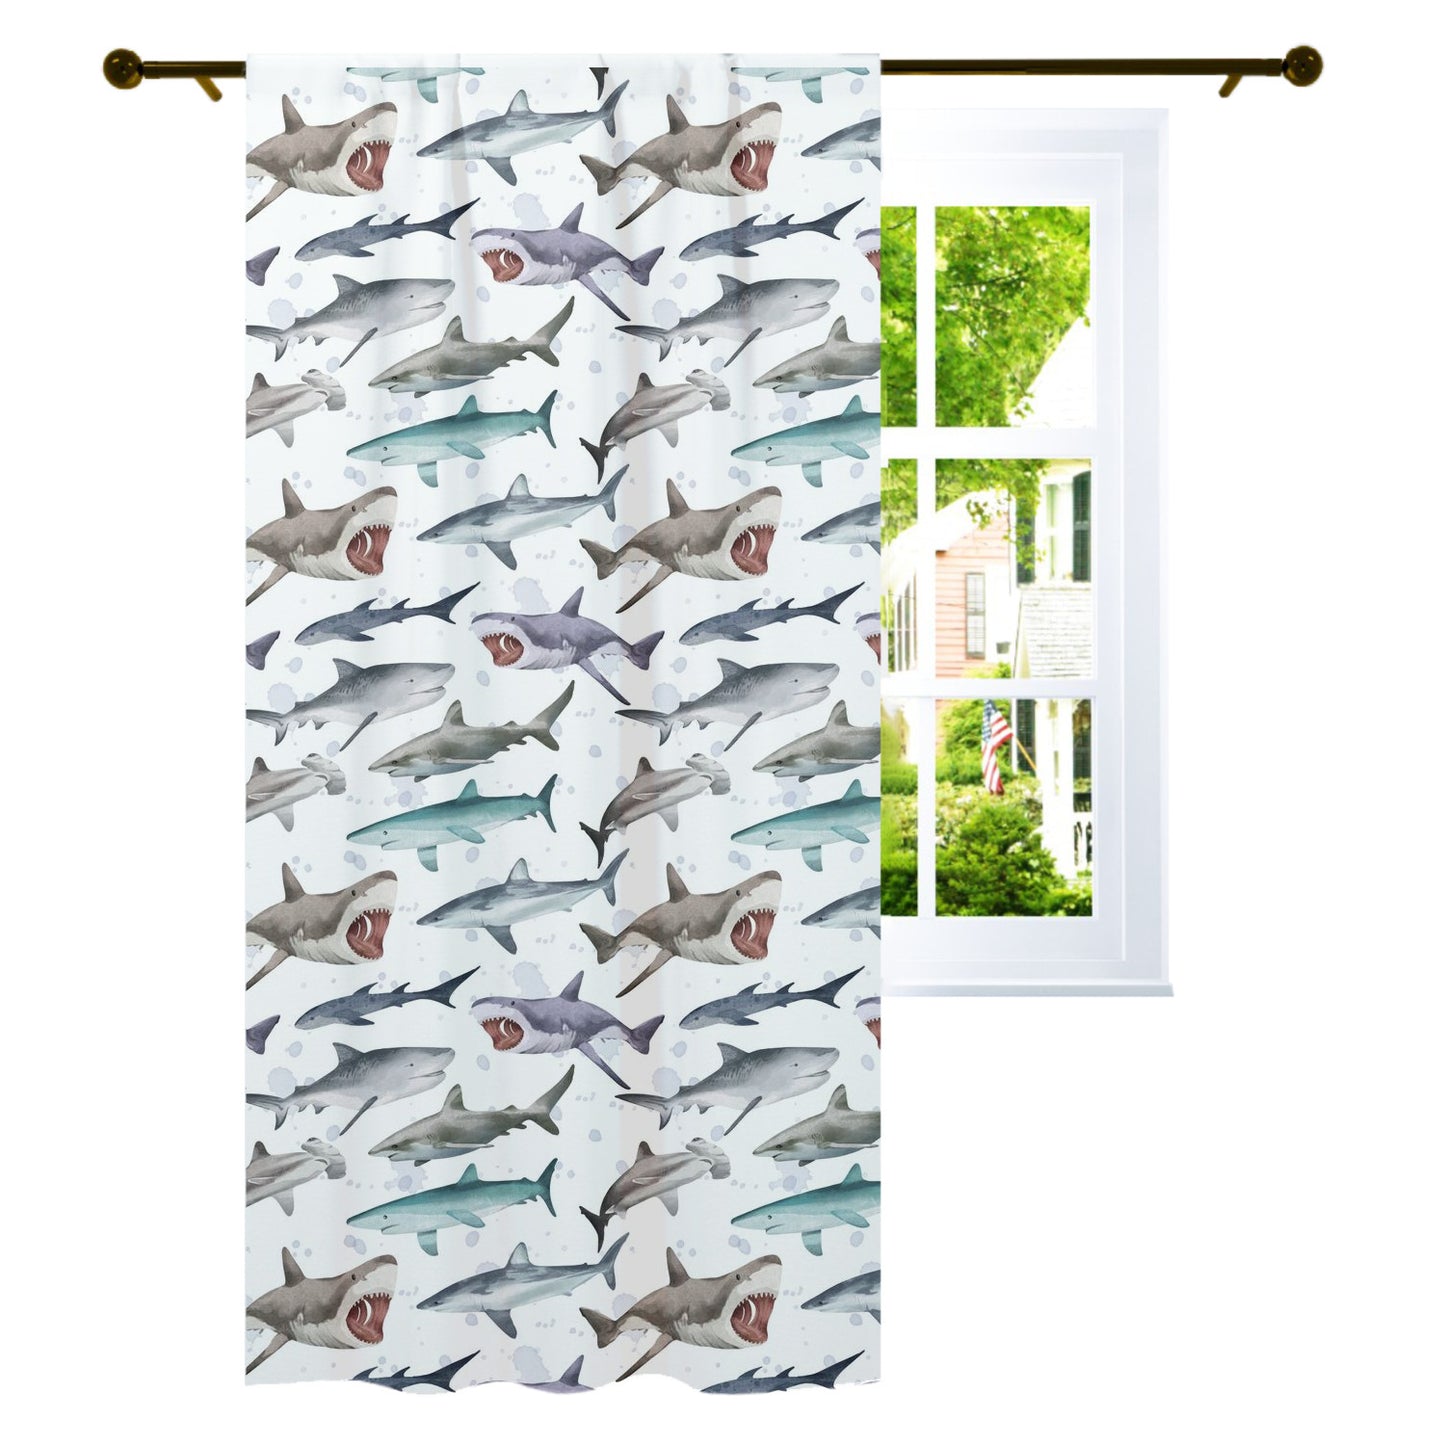 Shark curtain sigel panel, Nautical nursery decor - Jaws